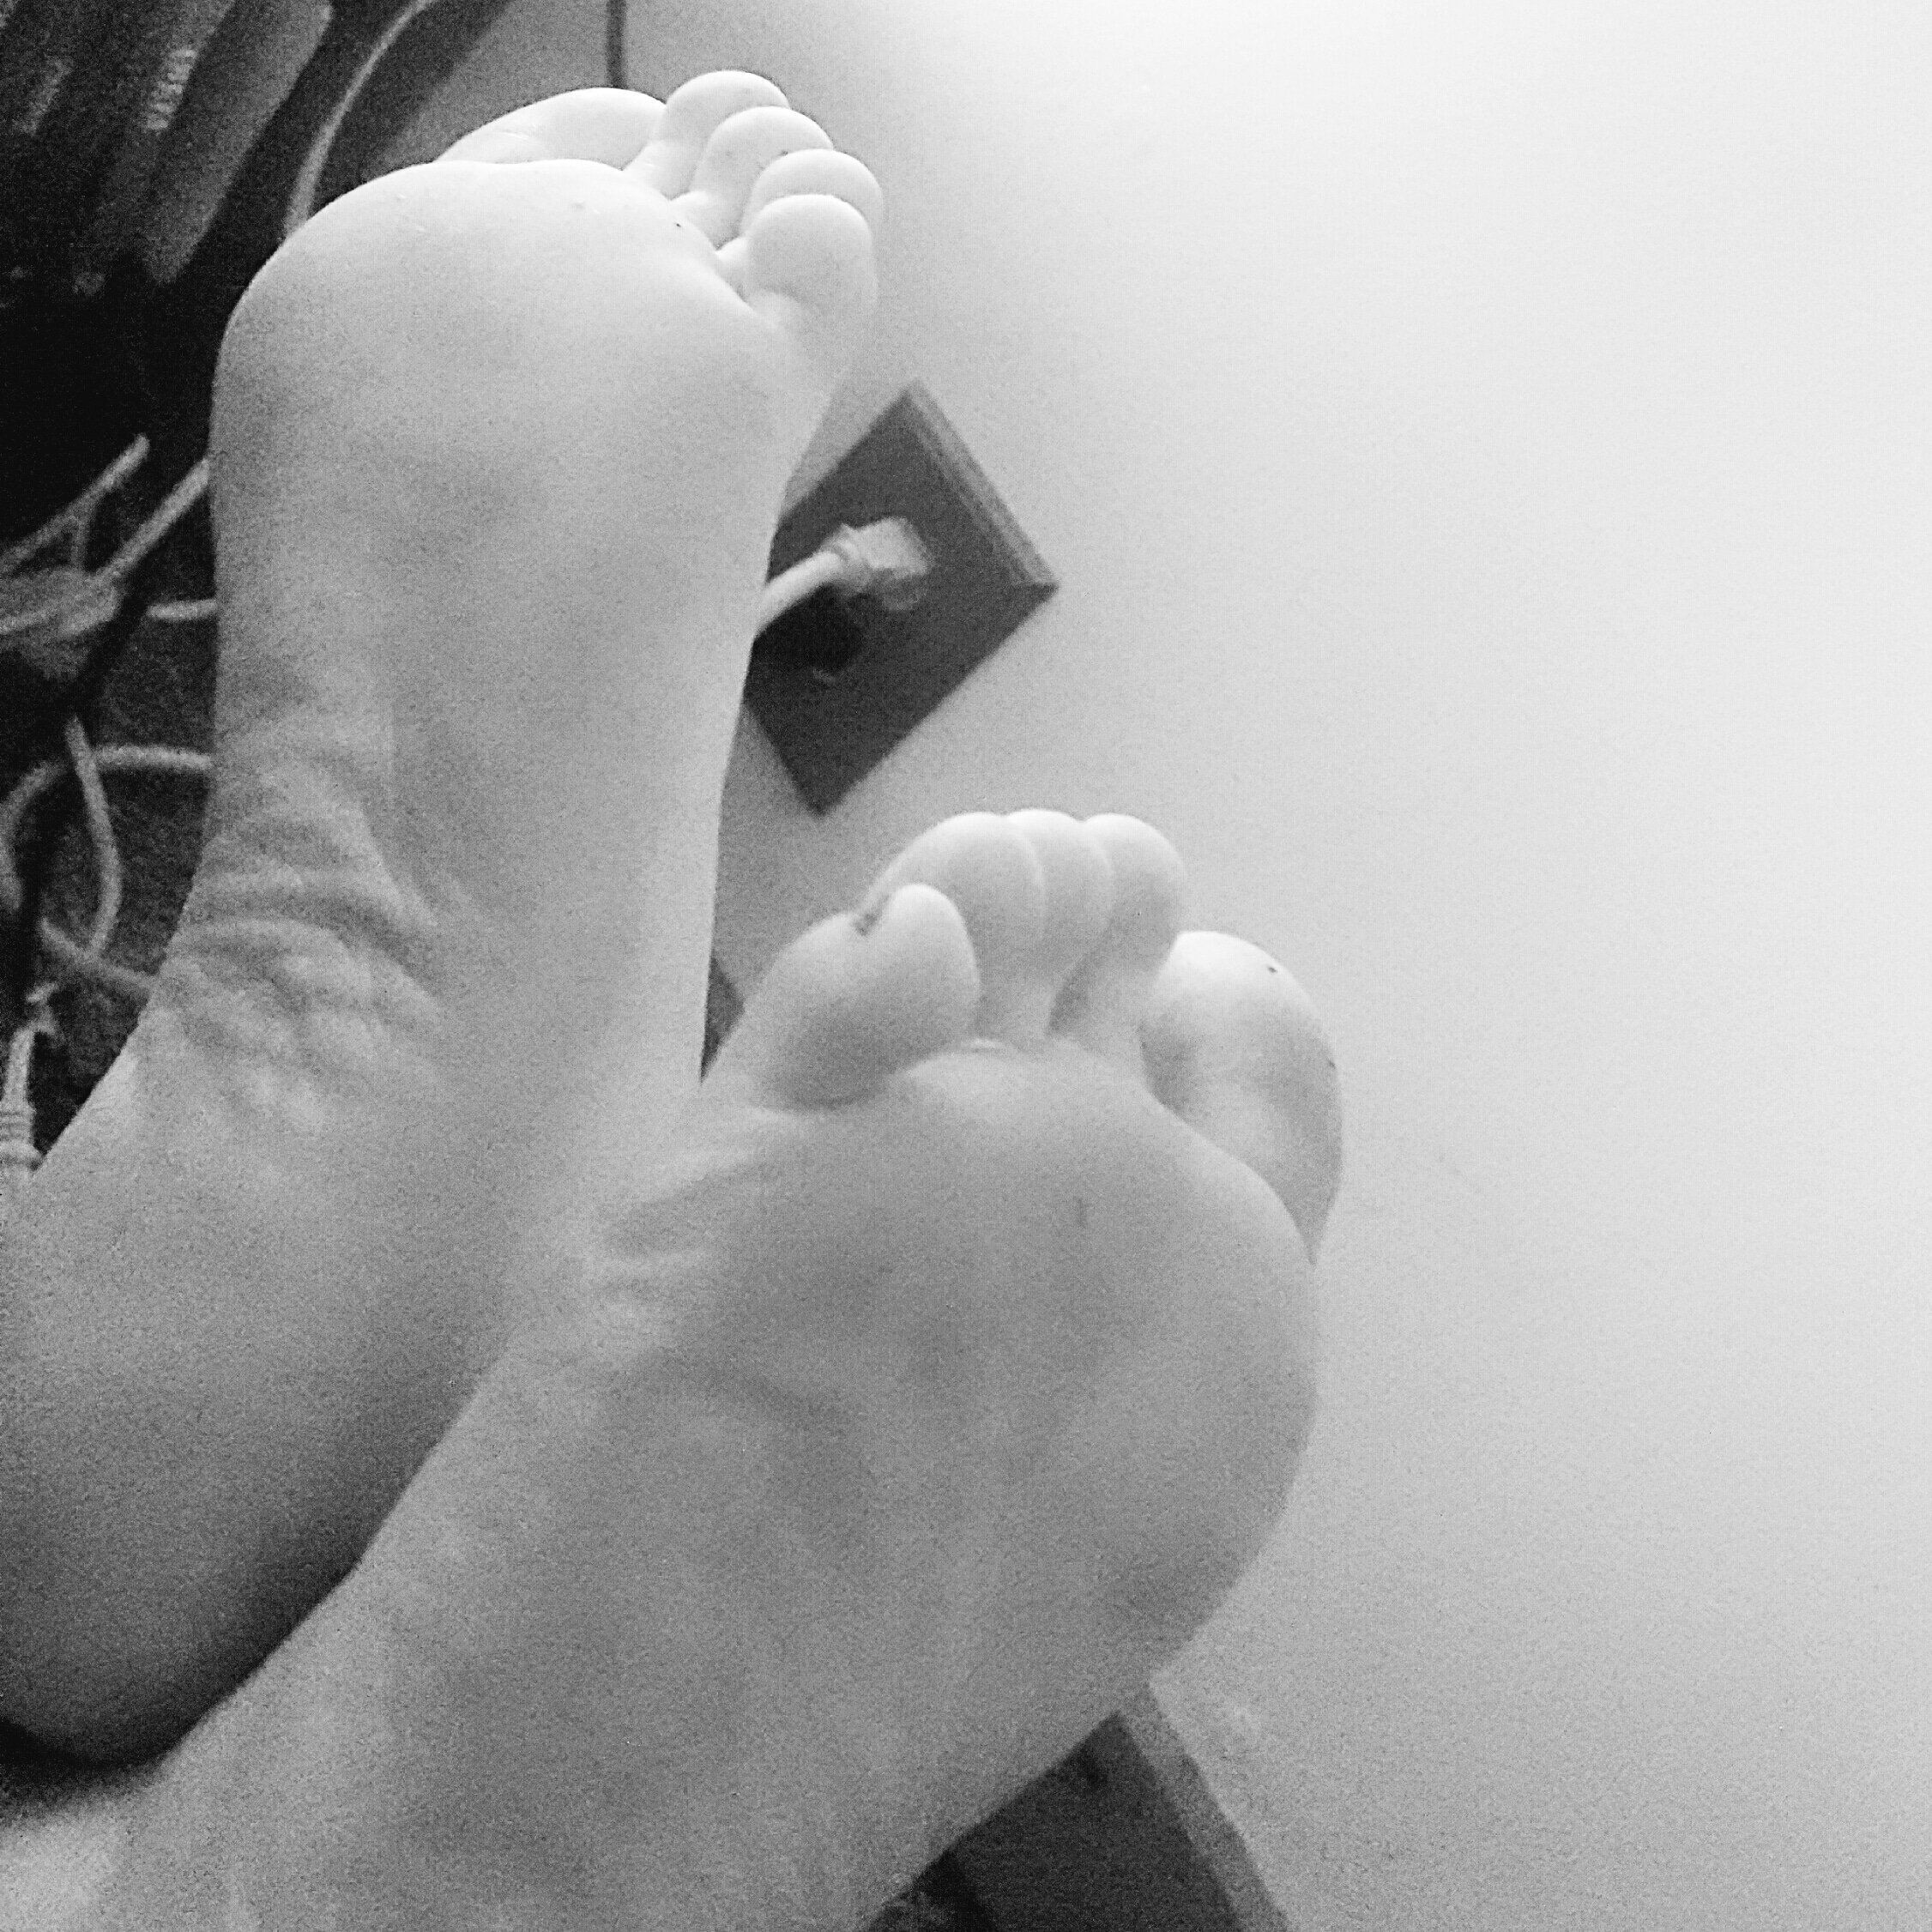 Selling feet pics👣
Insta: my.feet_your.pleasure😘
DM for orders & special requests😉
https://t.co/iuDjkUAFrq
Cash app: $myfeetyourpleasure